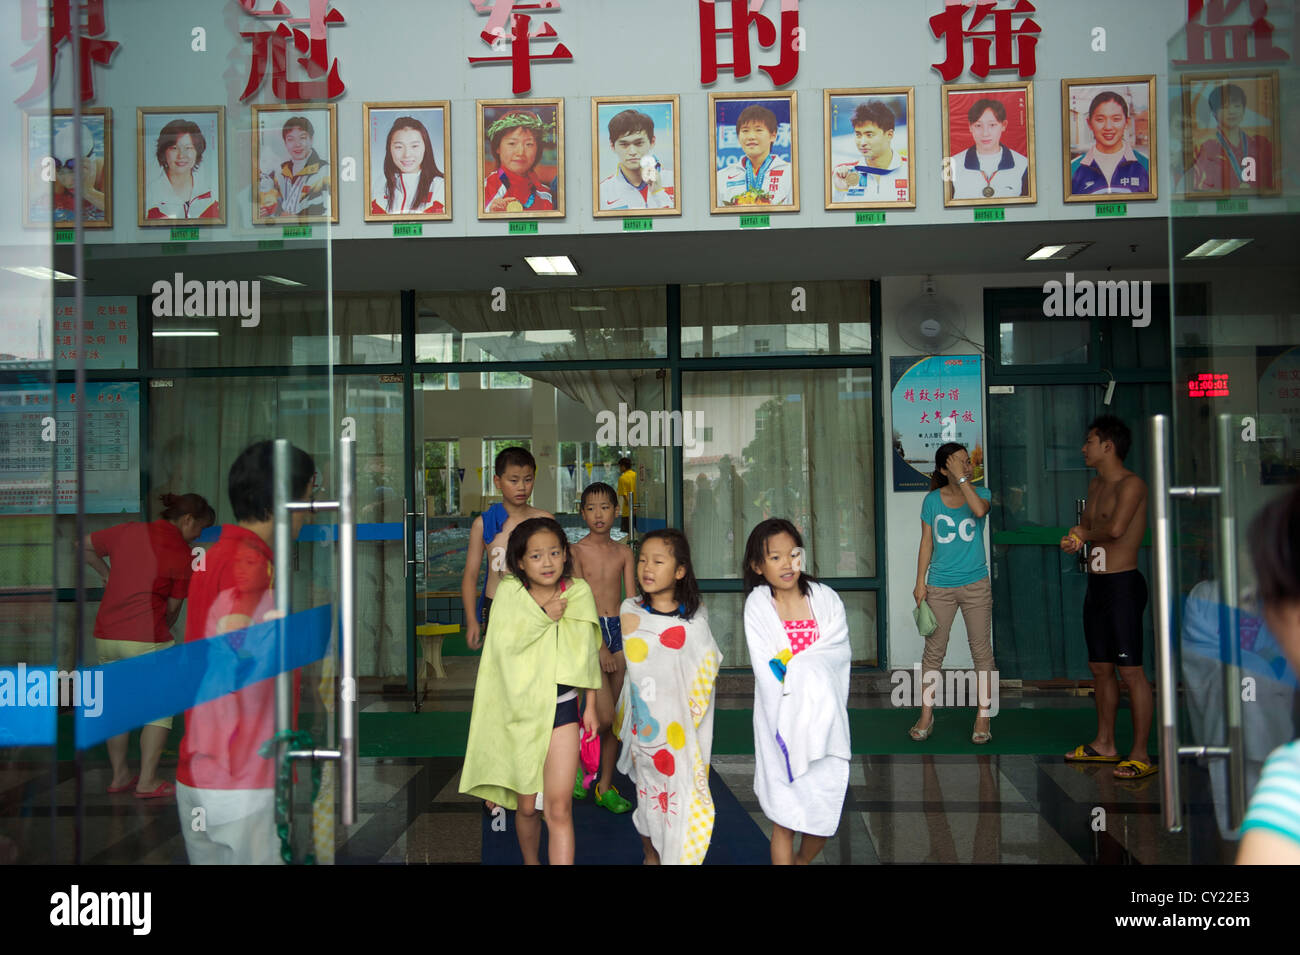 Immagini del mondo campians incl. Ye Shiwen e Sun yang appeso a Hangzhou Chen jinglun scuola sportiva. Cina 2012 Foto Stock